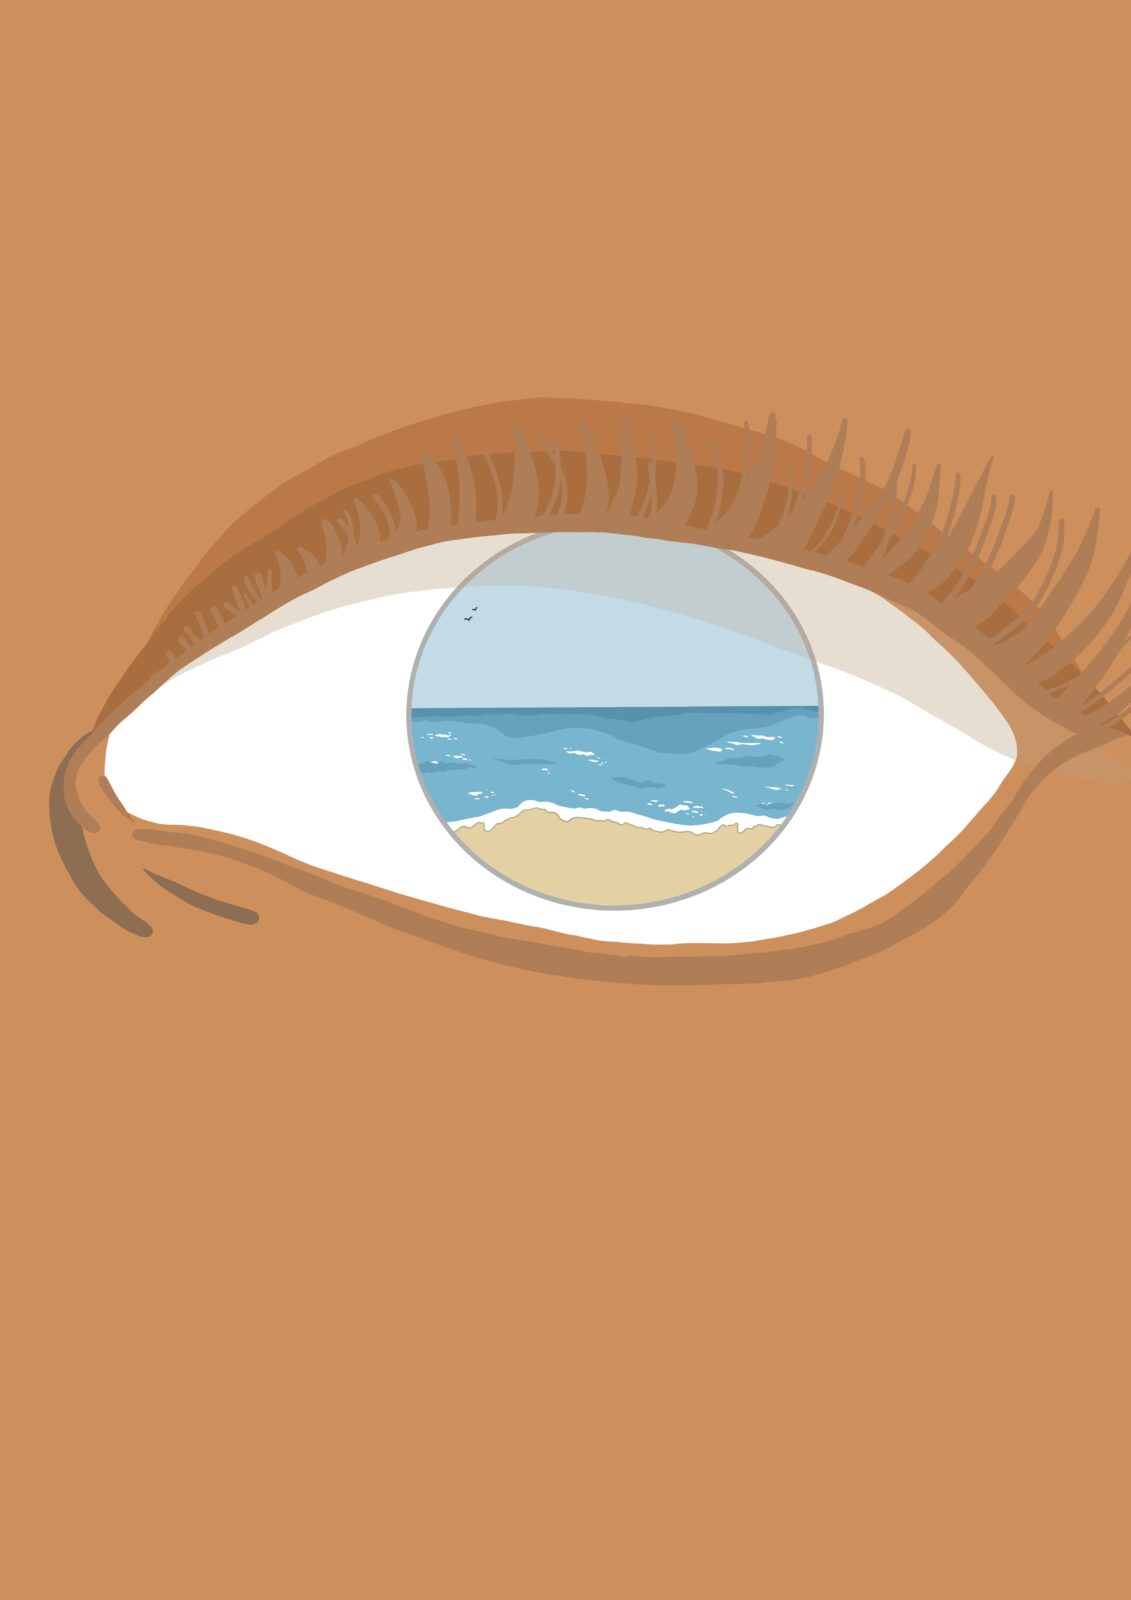 Illustration of a beach scene inside the iris of an eye.